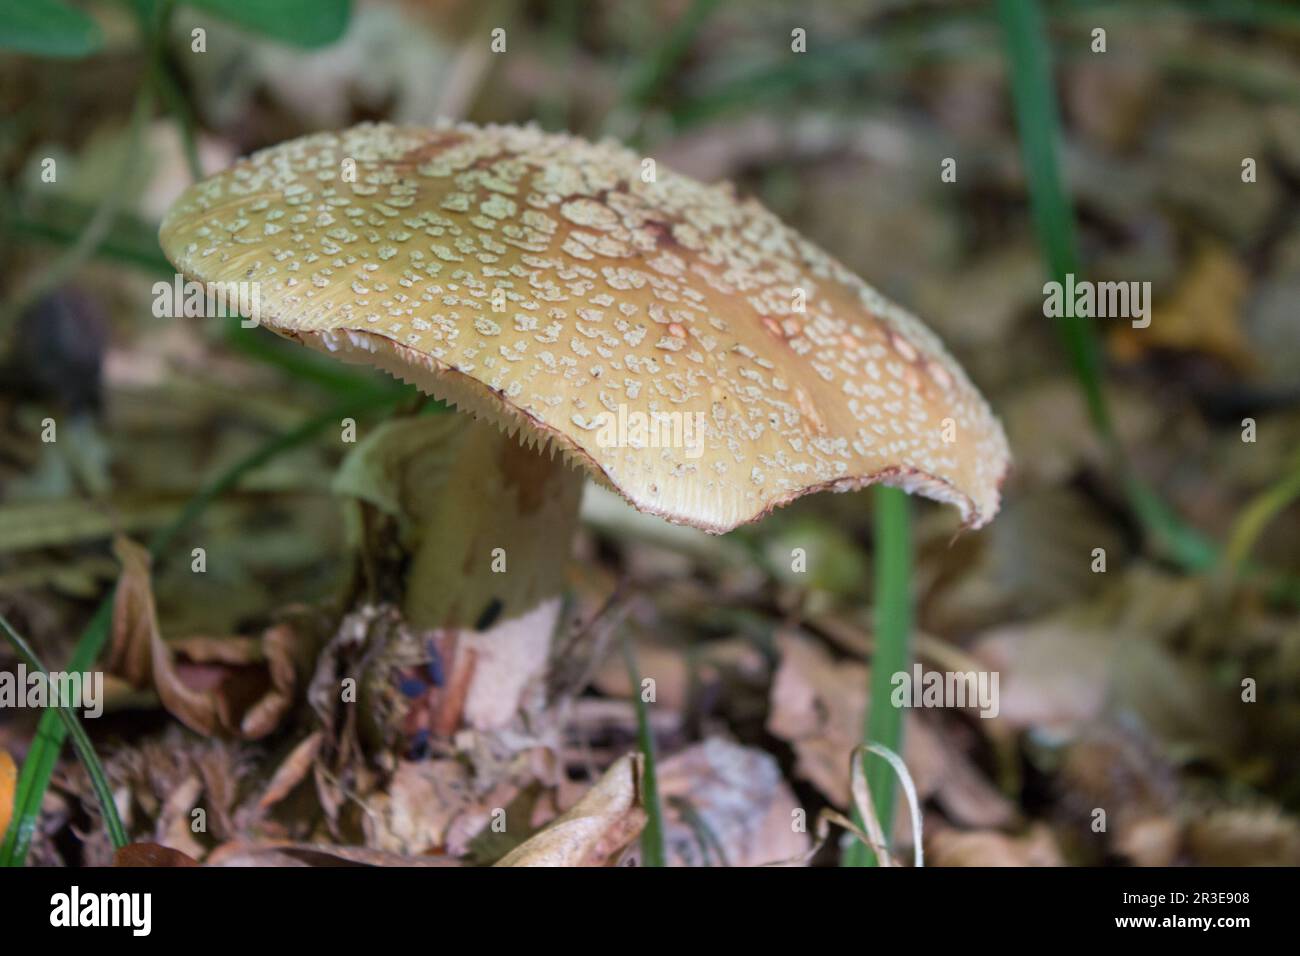 Autunno cresce fungo Amanita panterina avvelenata Foto Stock